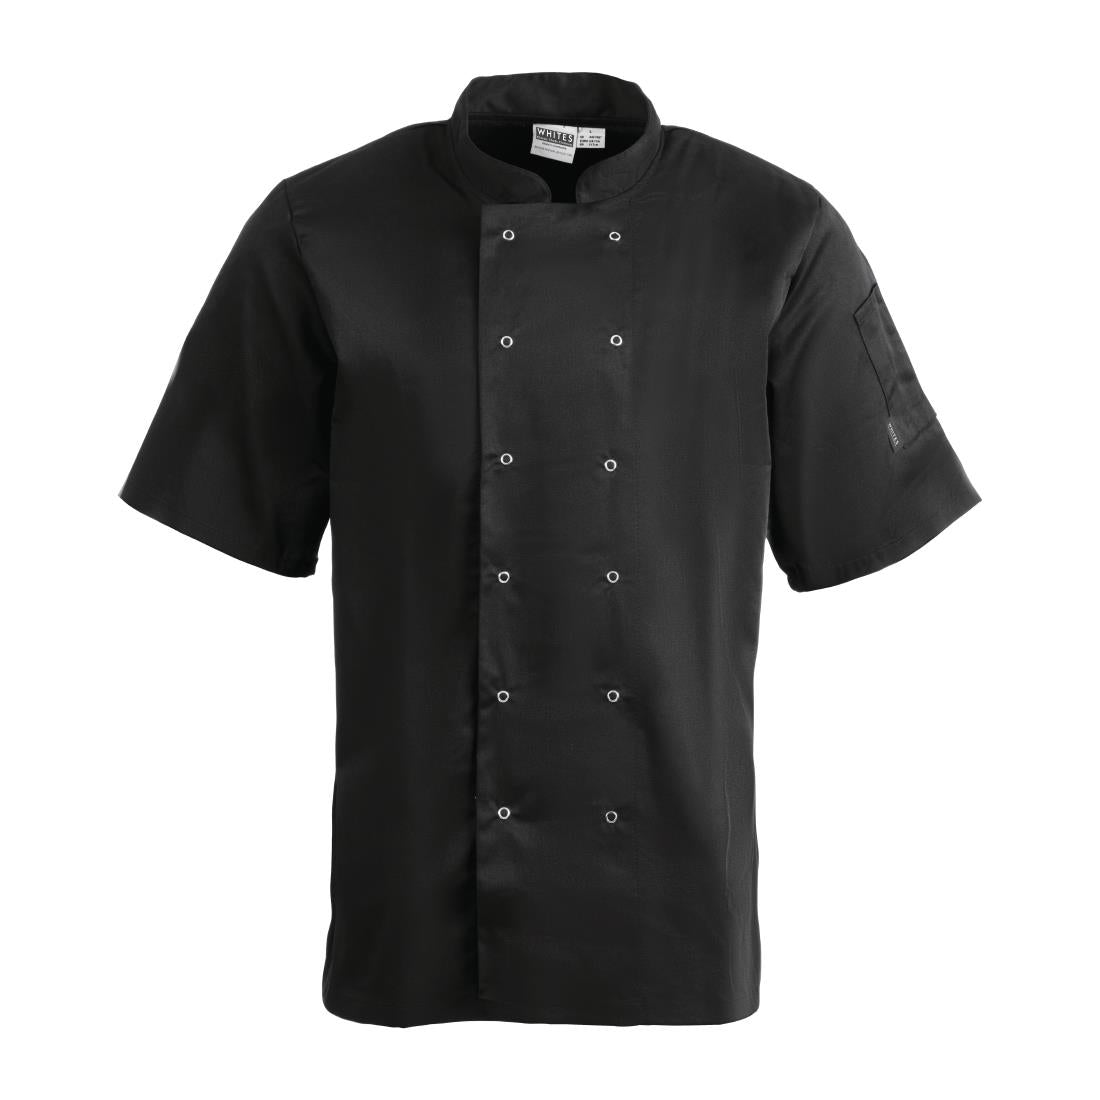 A439-L Whites Vegas Unisex Chefs Jacket Short Sleeve Black L JD Catering Equipment Solutions Ltd